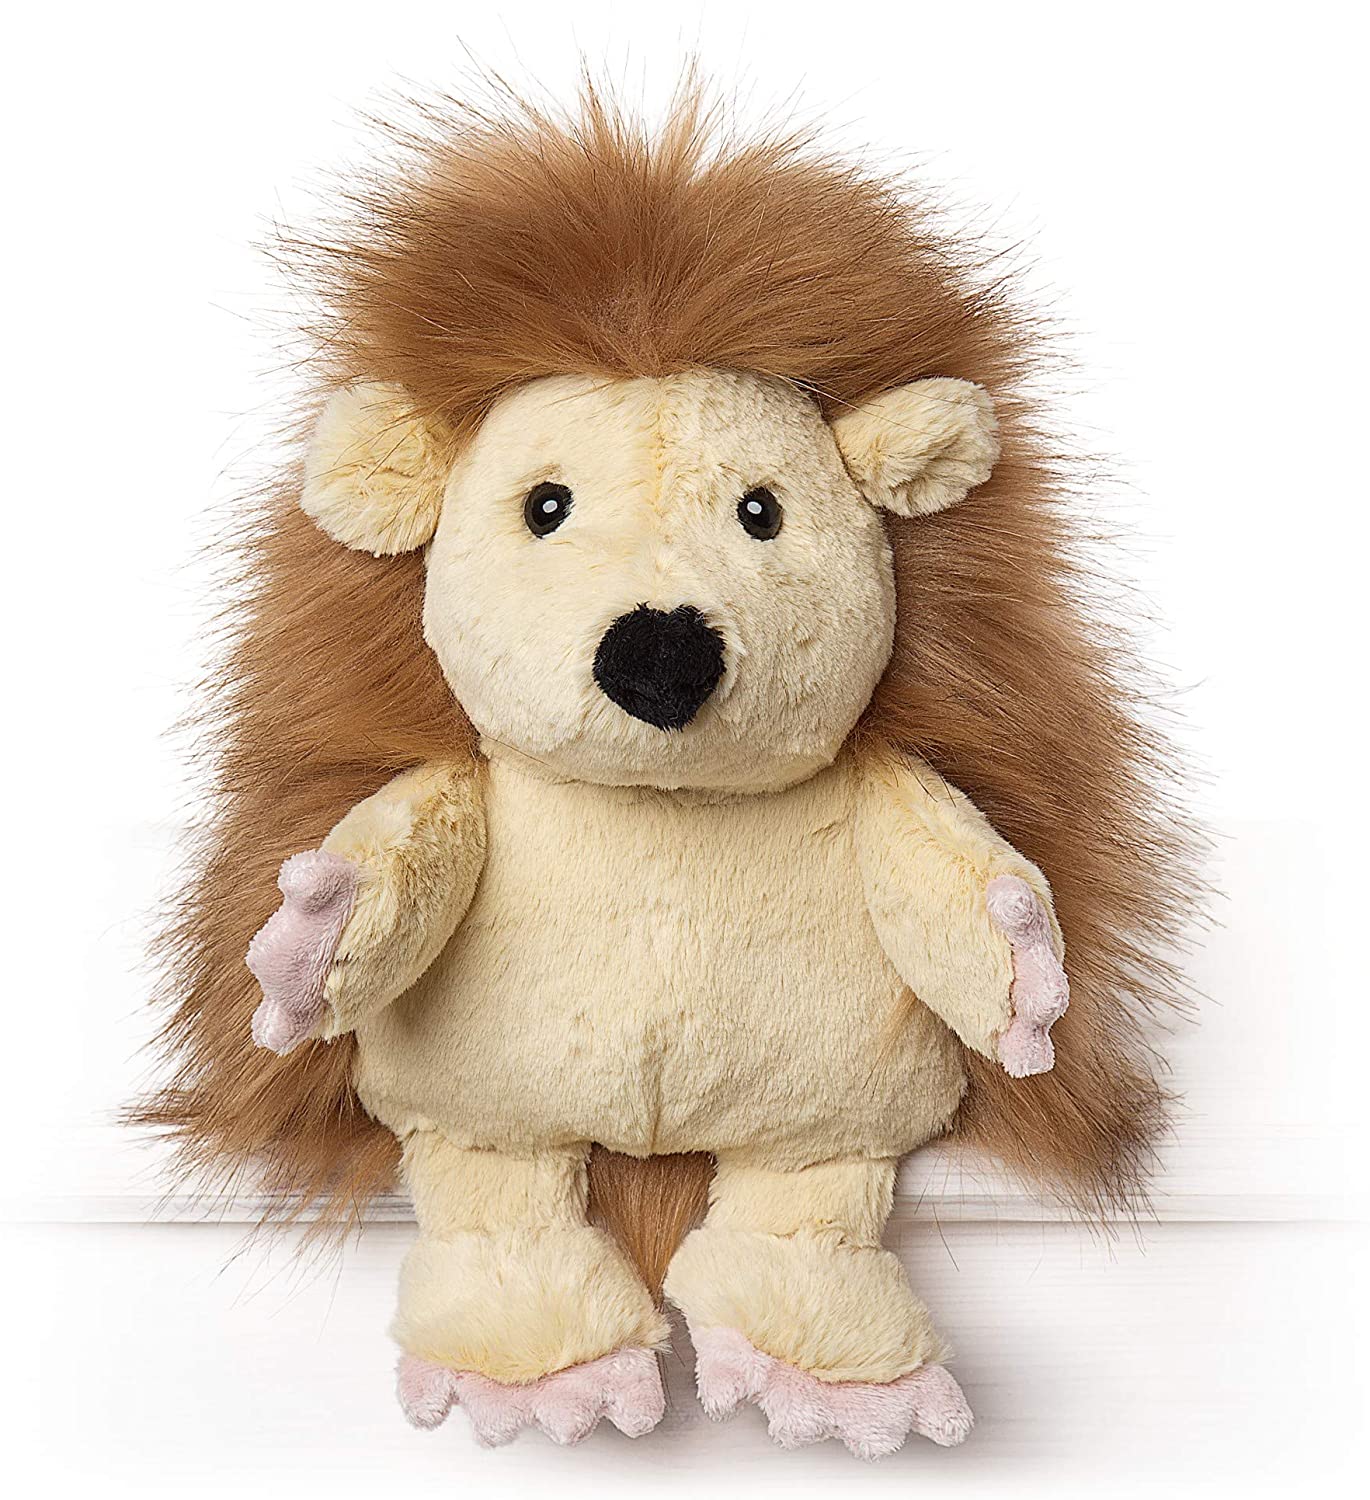 All Creatures April the Hedgehog Soft Toy (Medium)